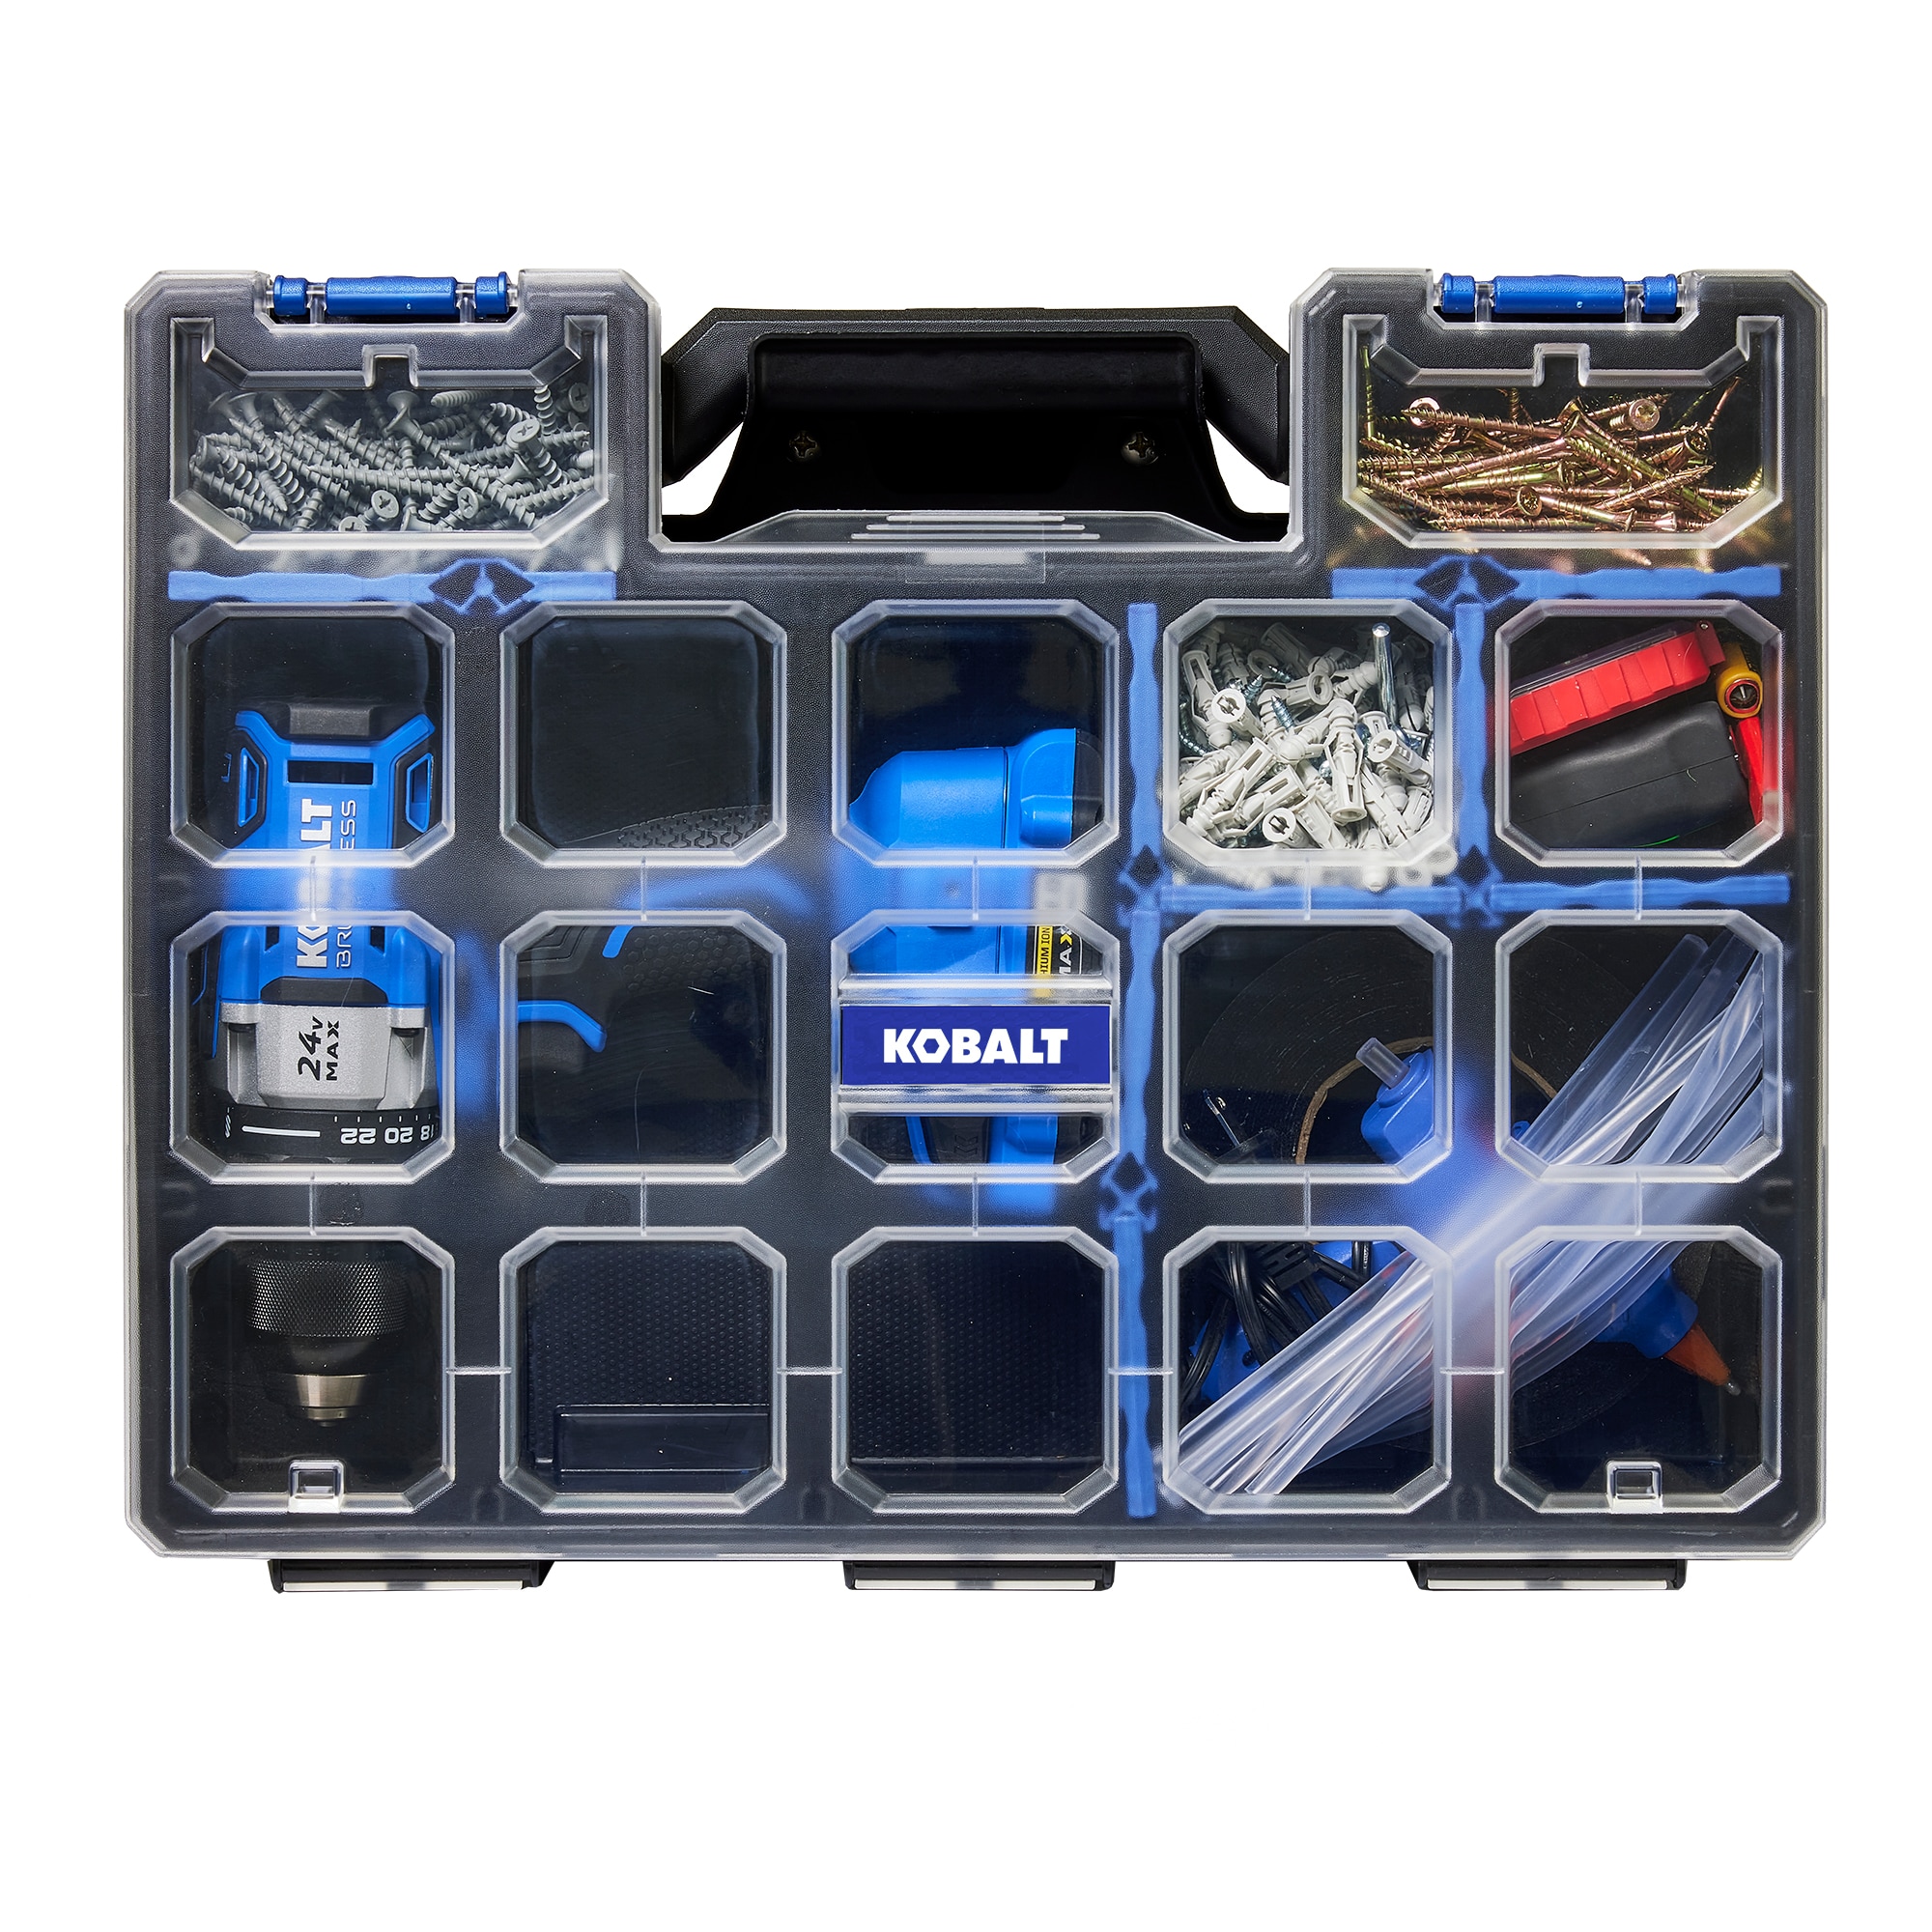 Kobalt Plastic 6-Compartment Plastic Small Parts Organizer in the